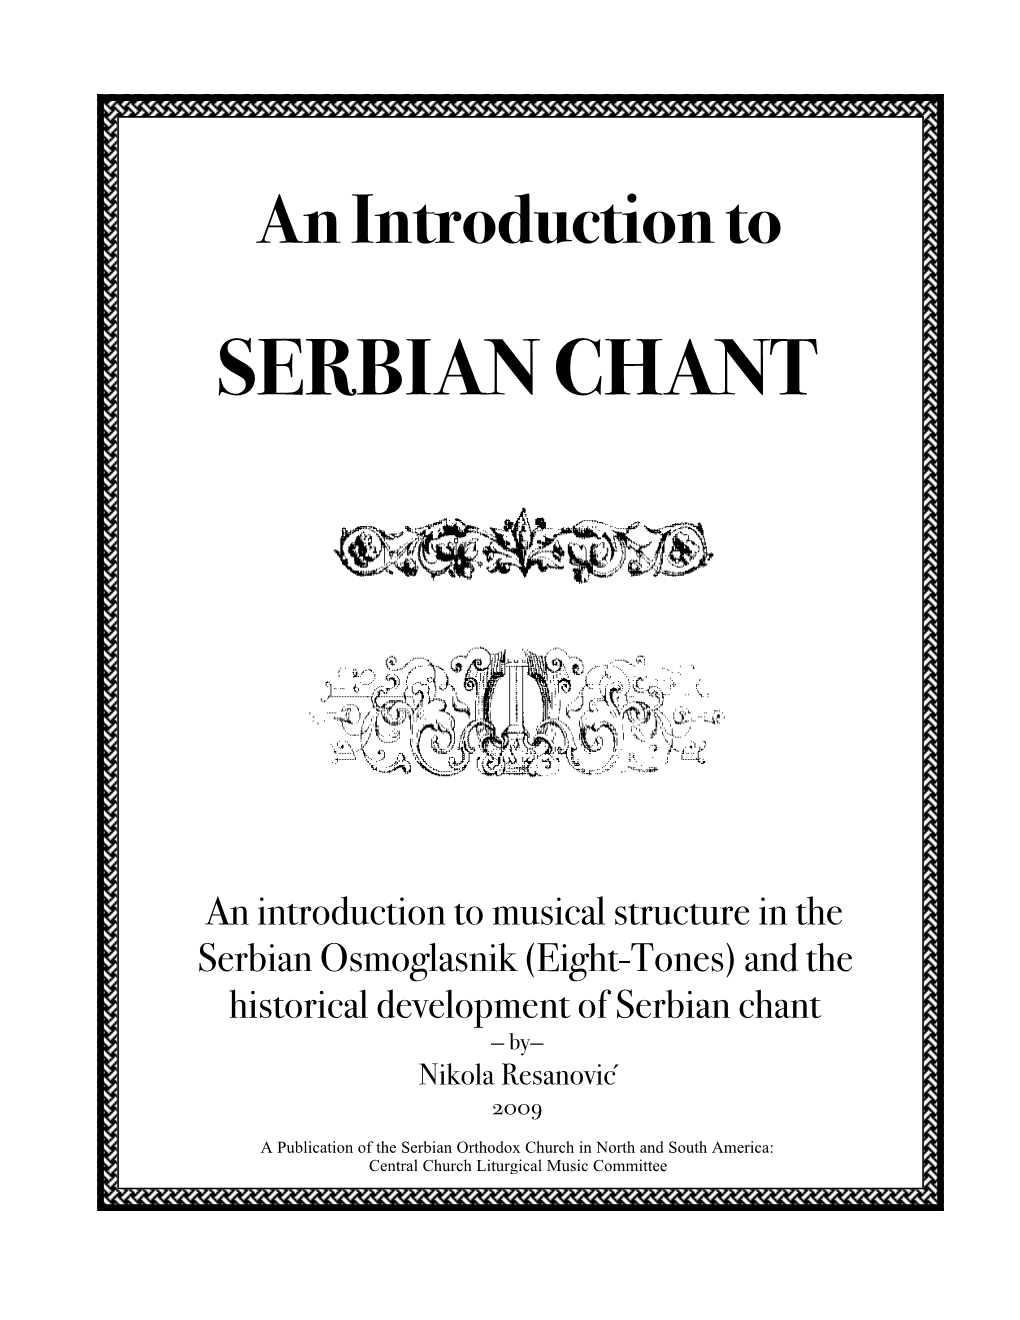 Serbian Chant